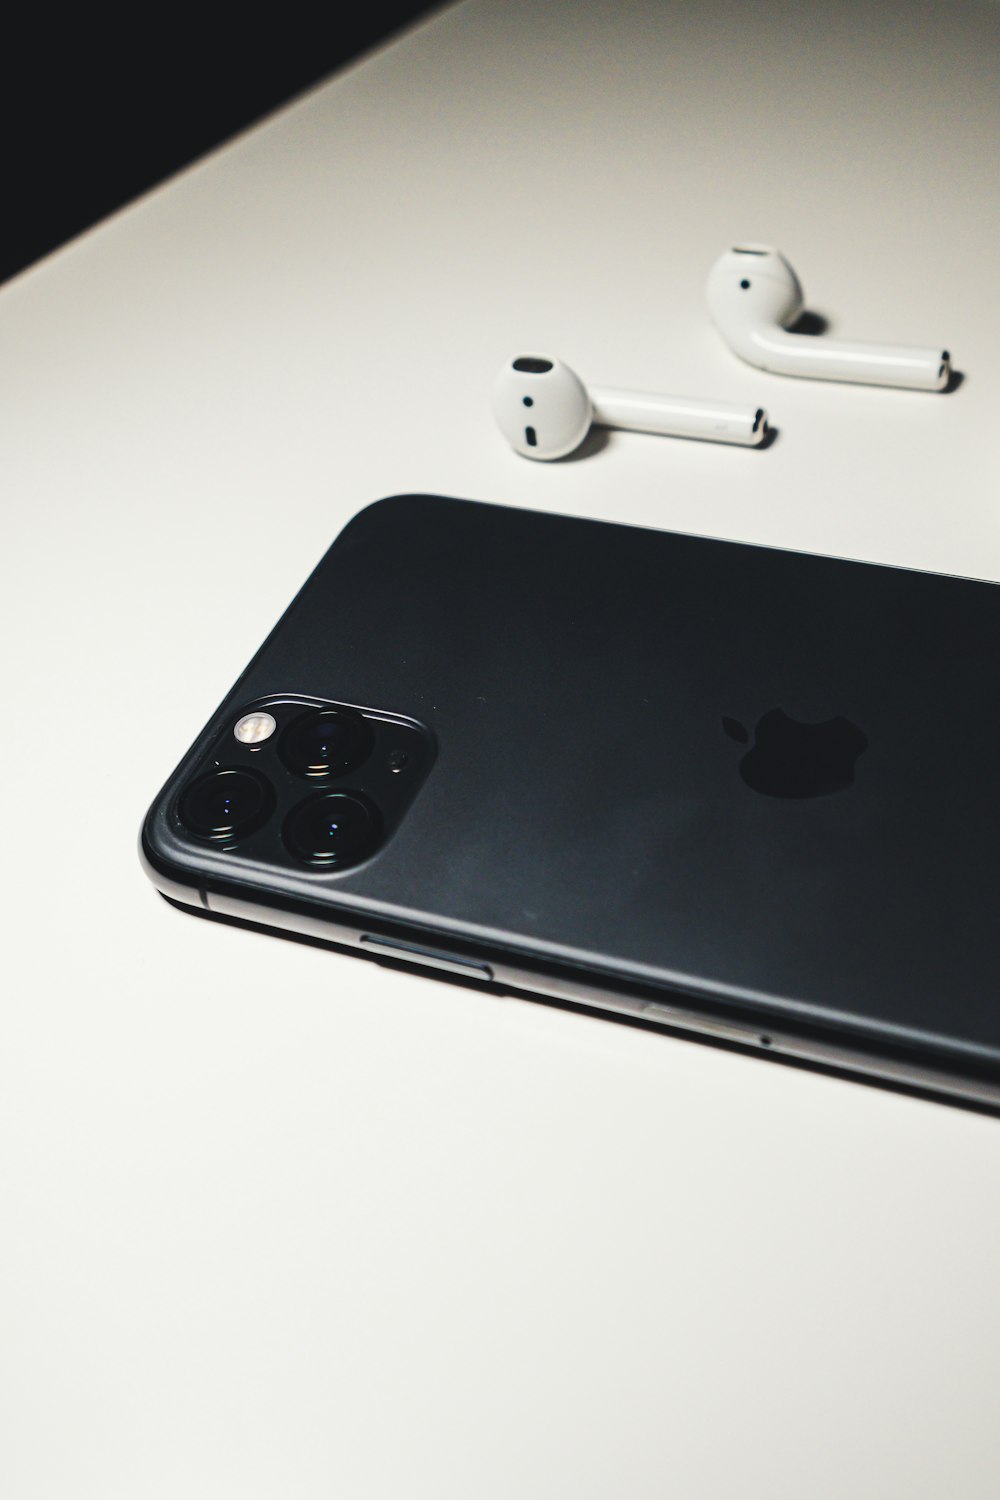 IPhone 11 beside Apple AirPods photo – Free Phone Image on Unsplash